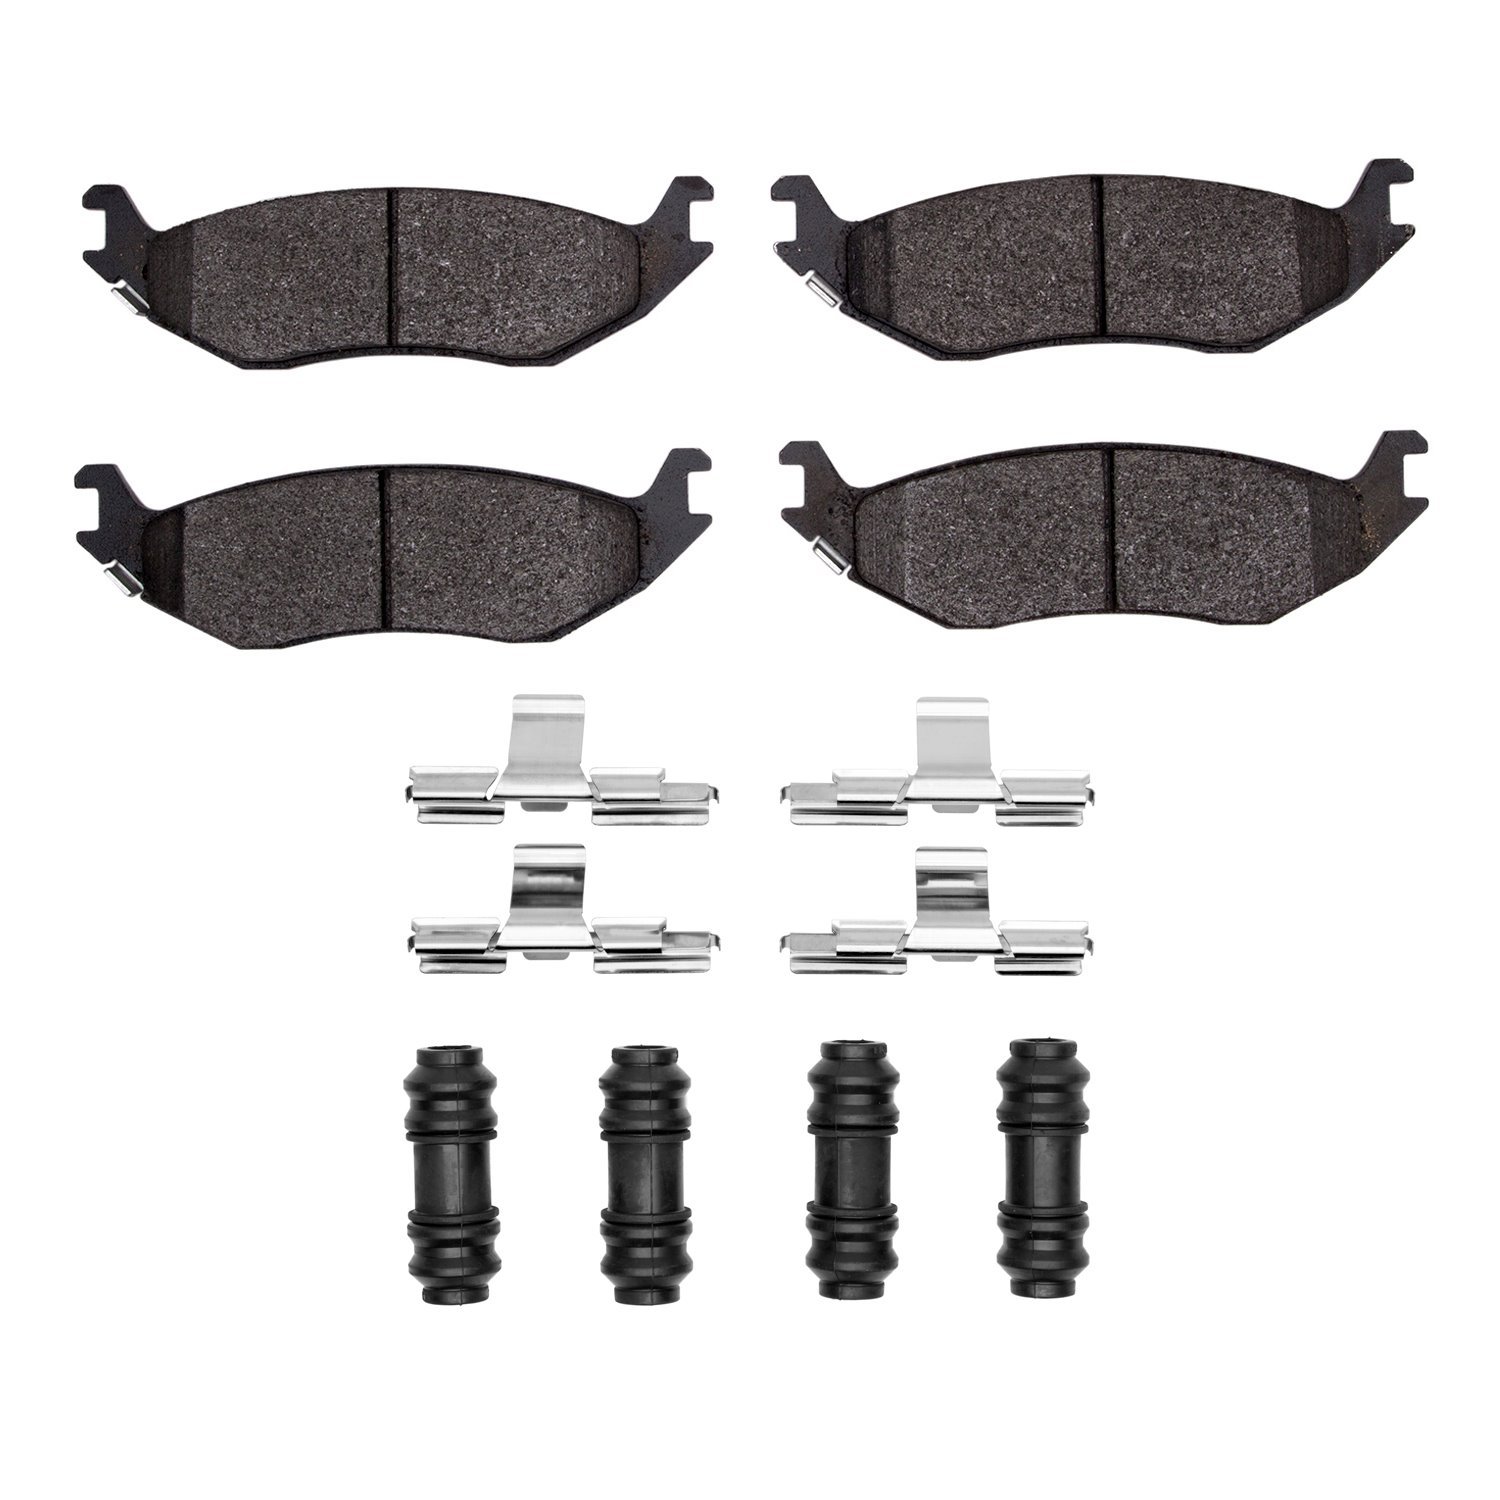 1310-0898-01 3000-Series Ceramic Brake Pads & Hardware Kit, Fits Select Mopar, Position: Rear